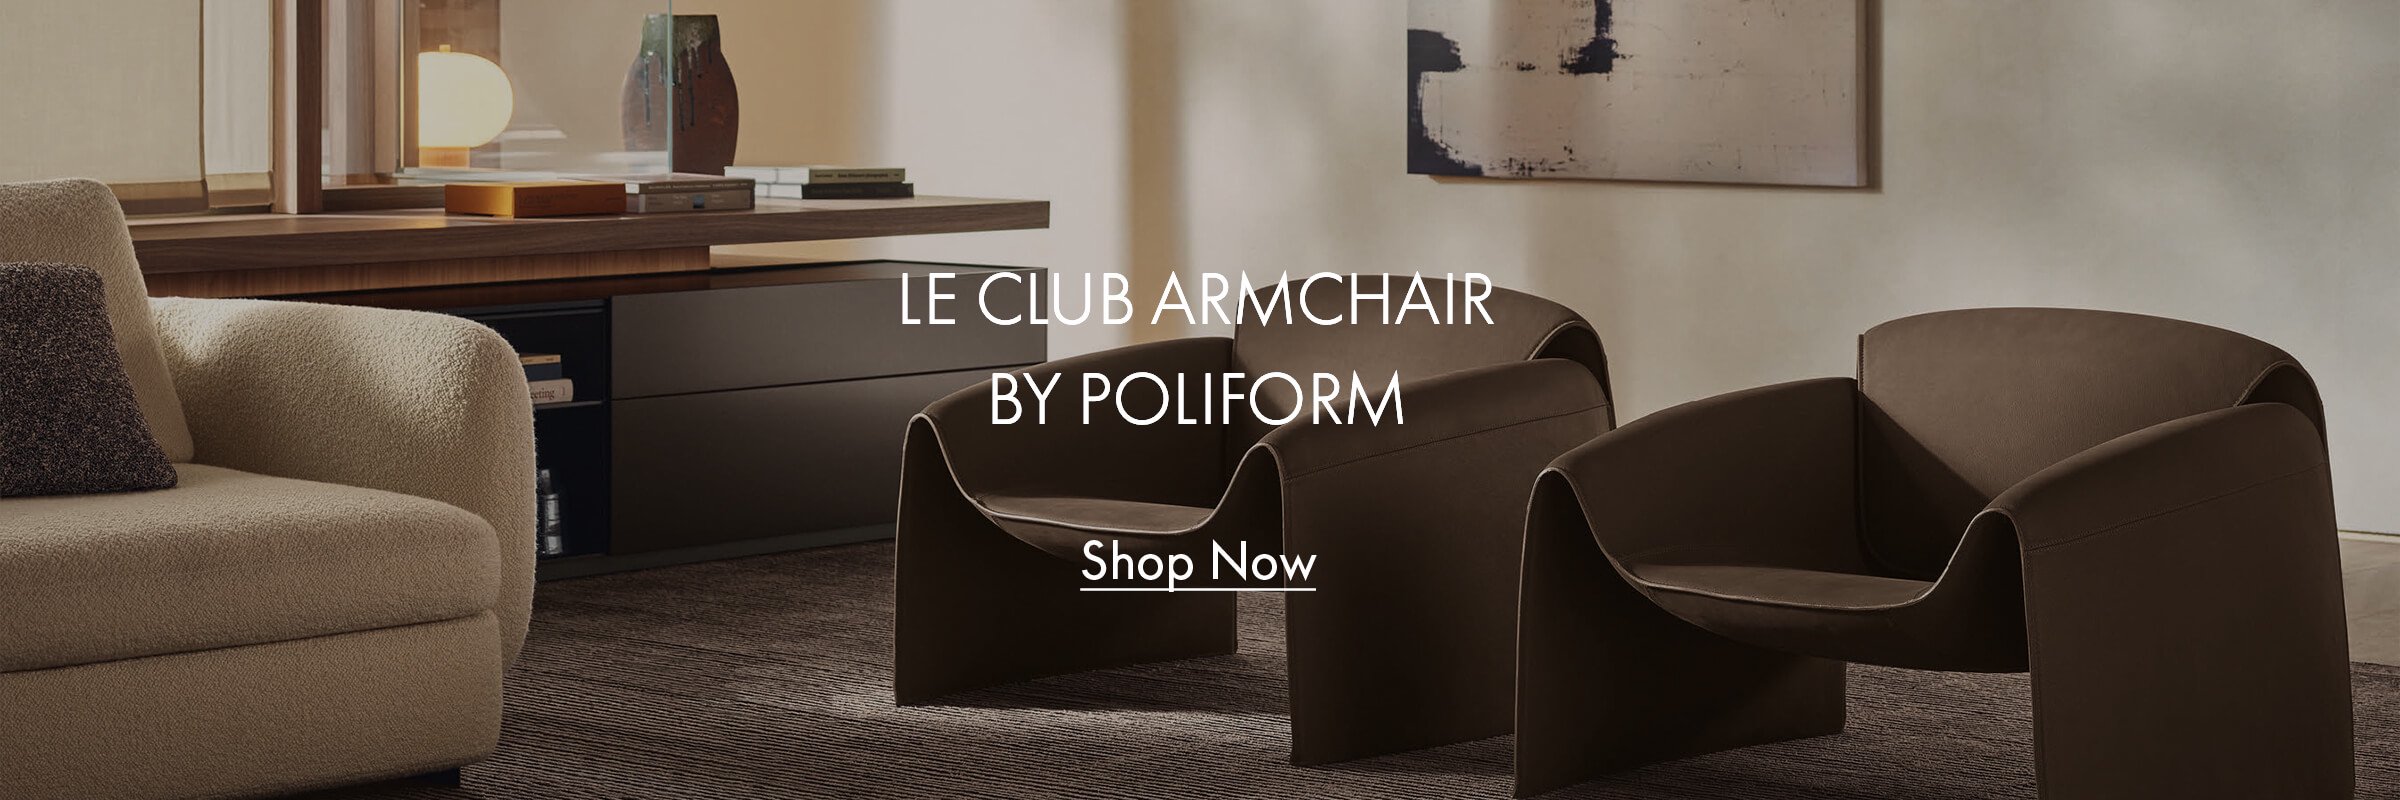 Poliform Le Club Armchair